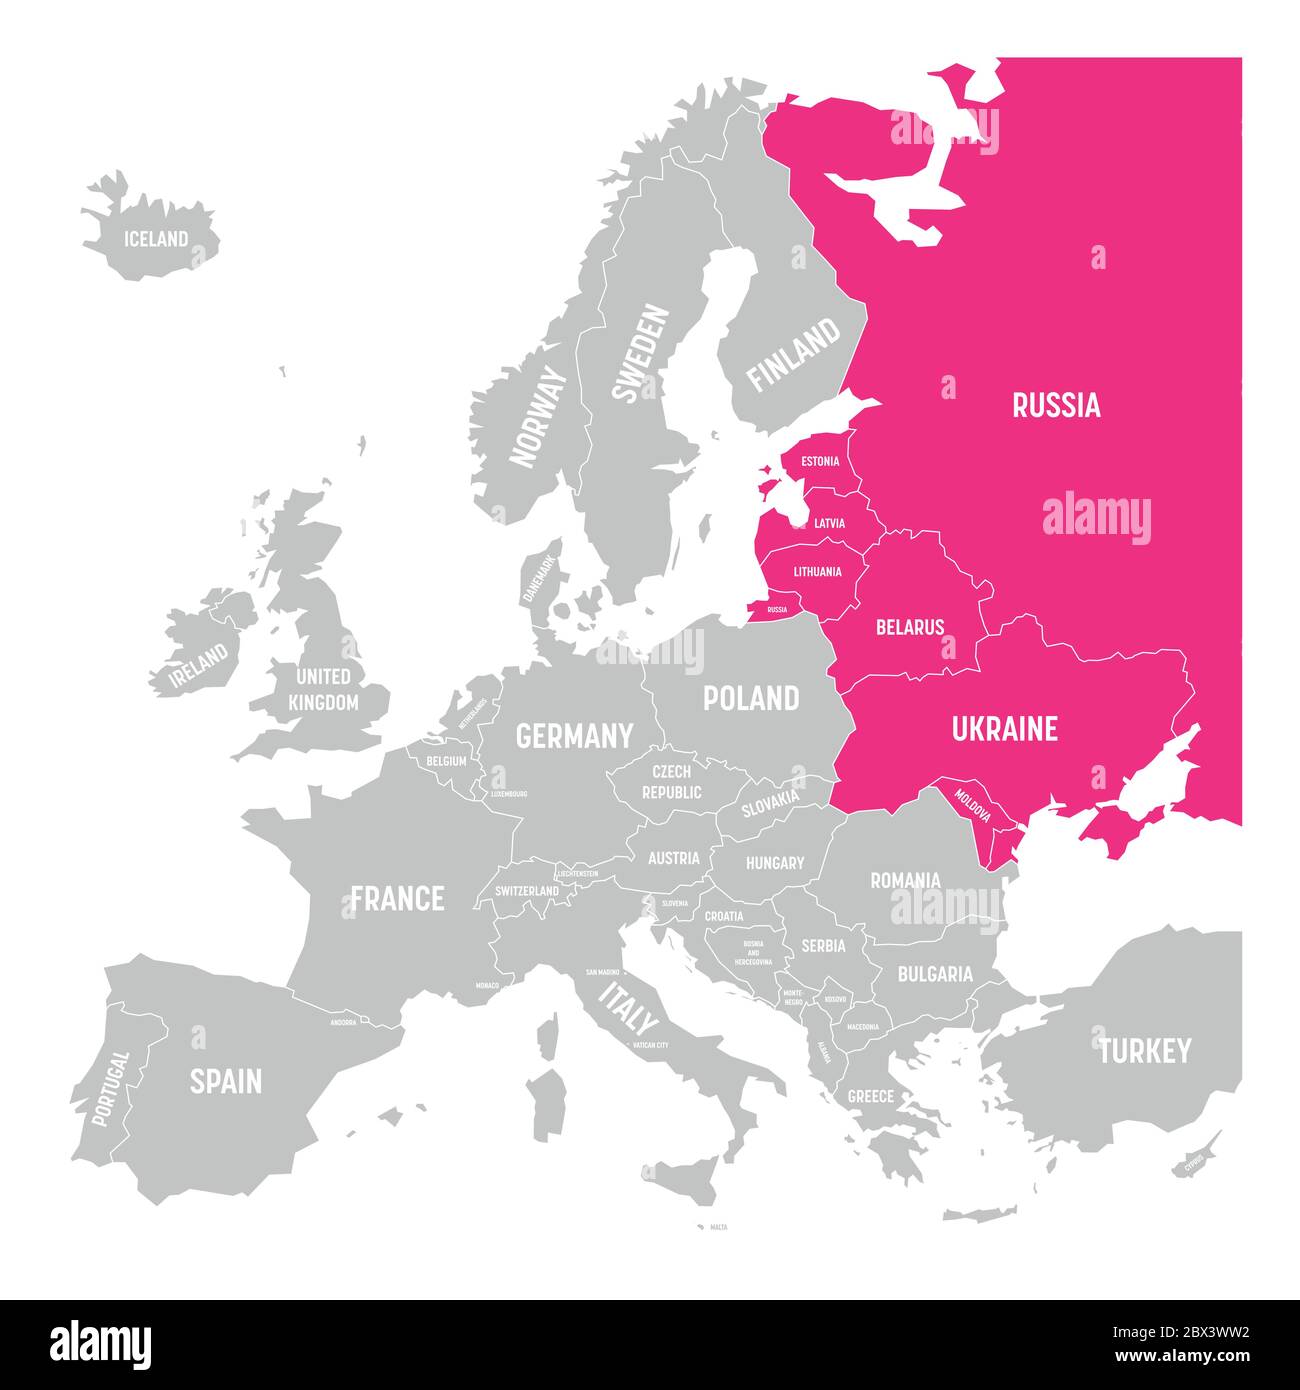 Soviet Union Political Map